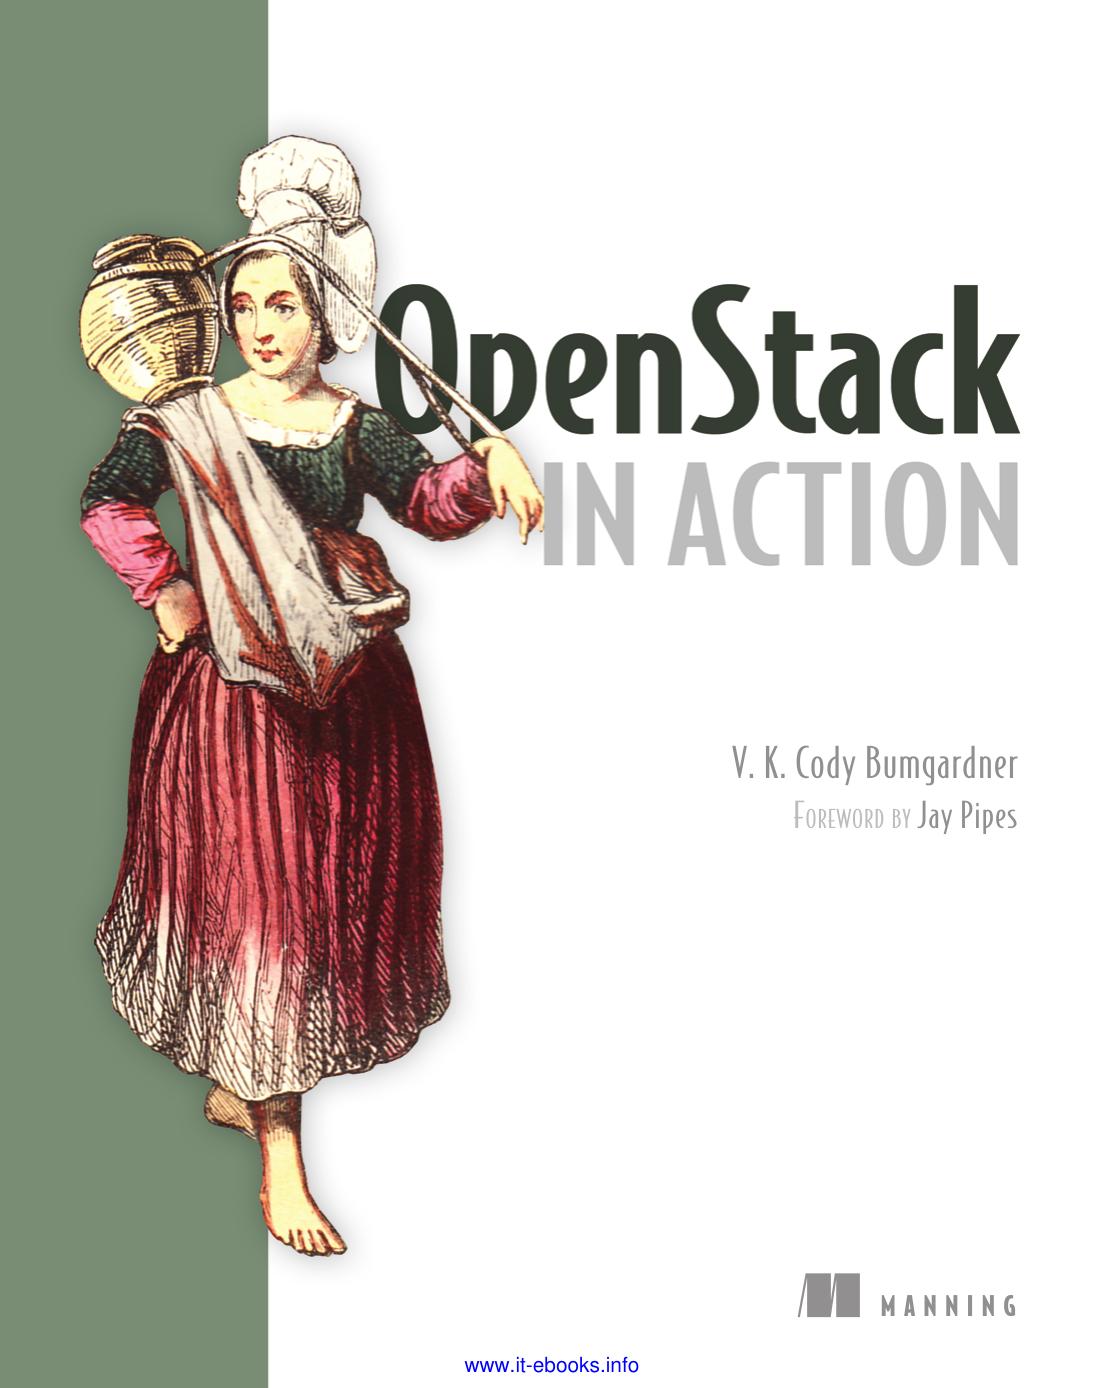 OpenStack in Action